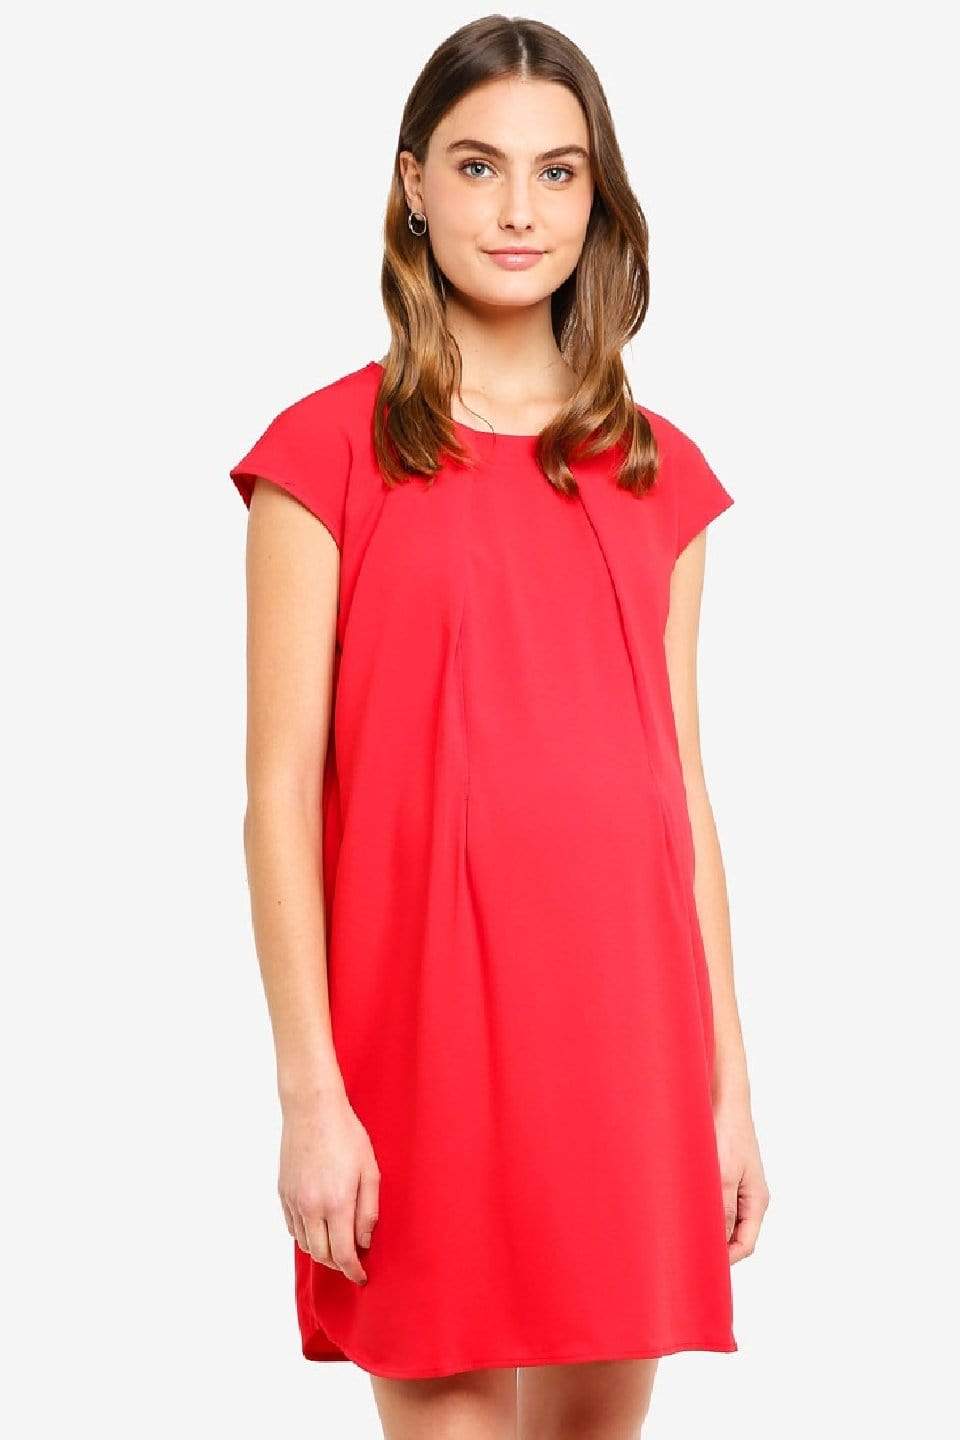 Spring Maternity's Cap Sleeves Corissa Red Nursing Dress Dresses